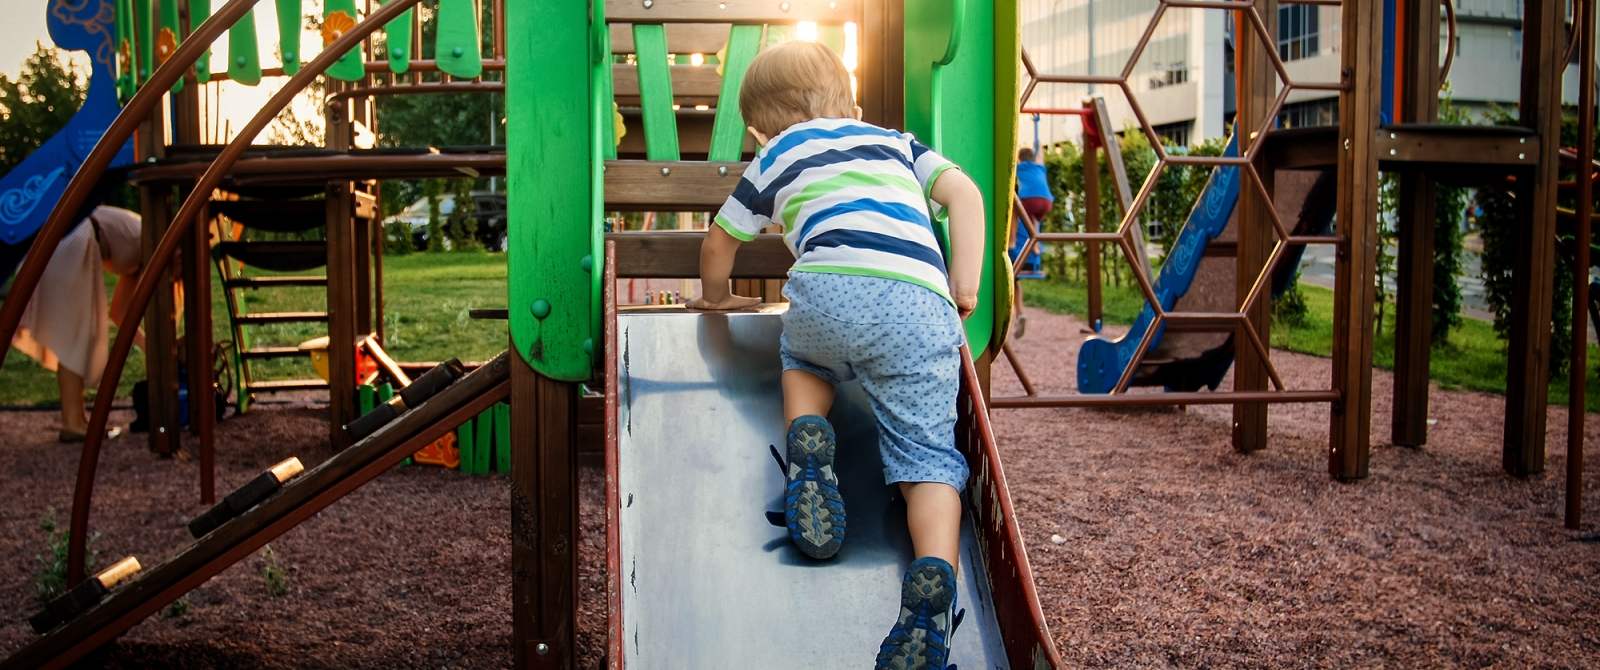 child playing on playground slide